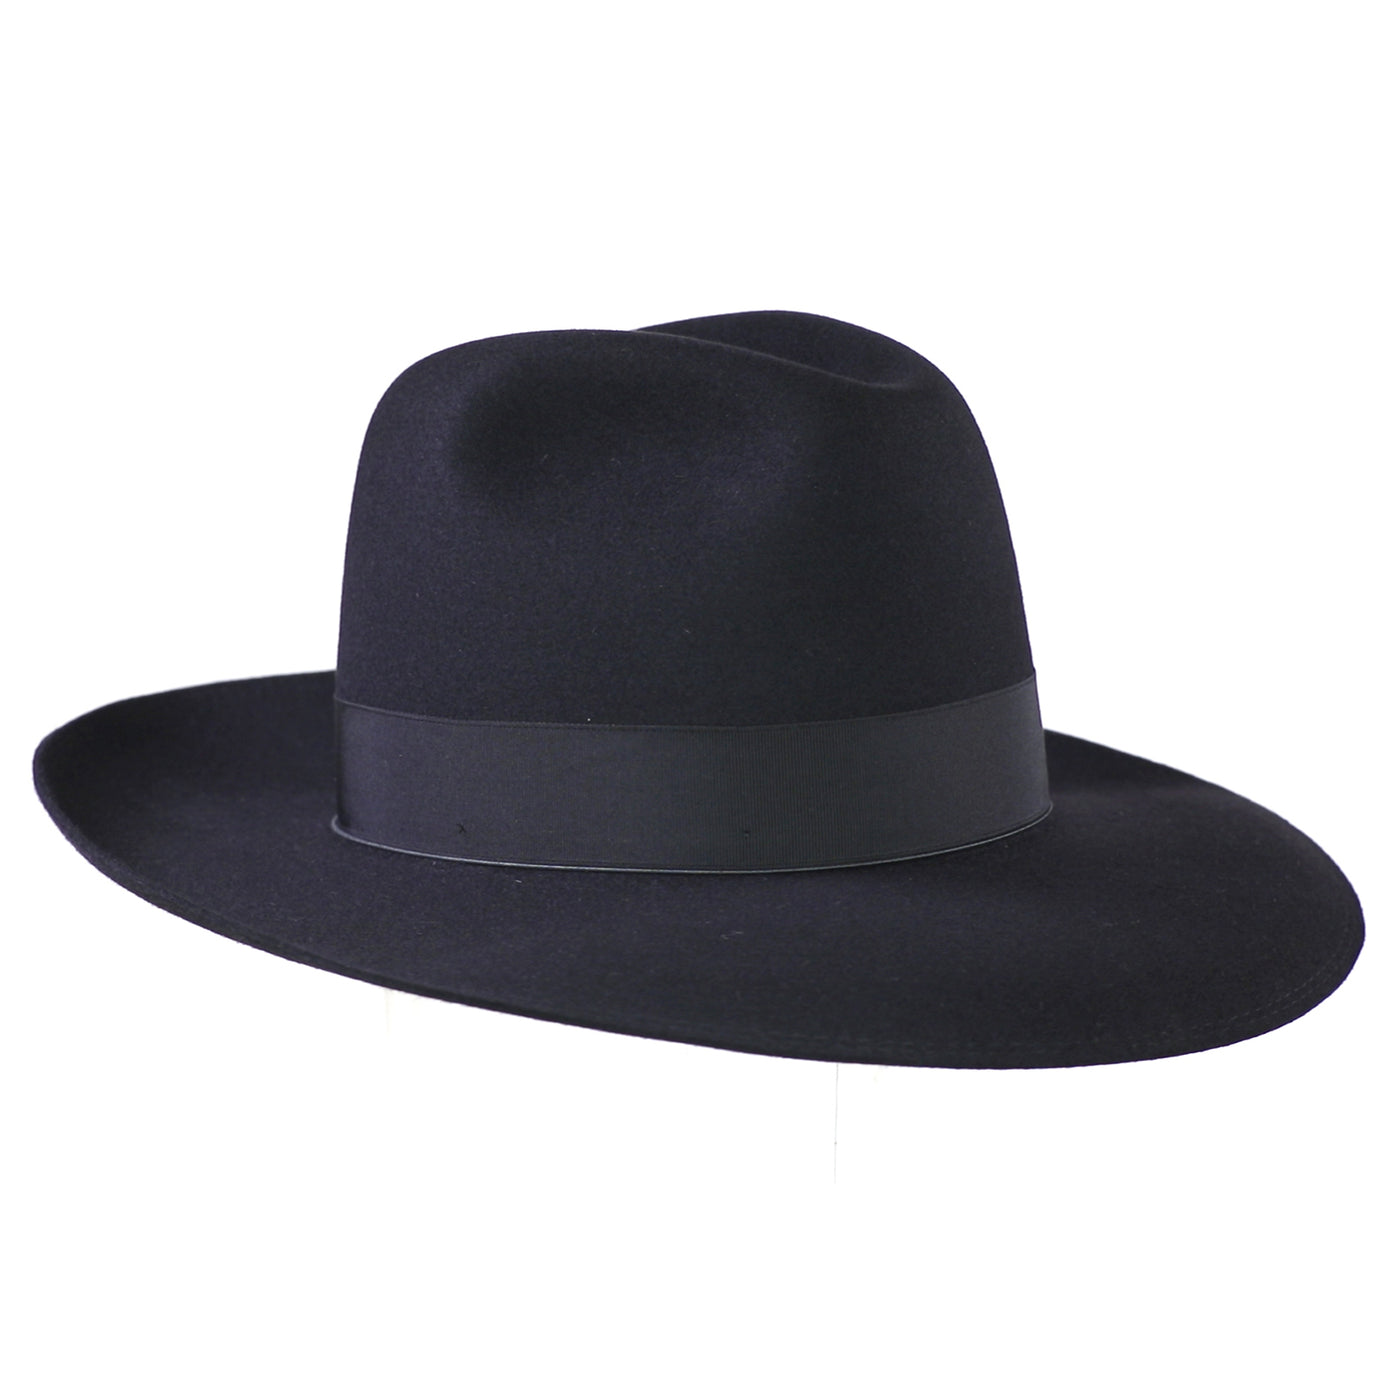 Valenza 312, product_type] - Borsalino for Atica fedora hat